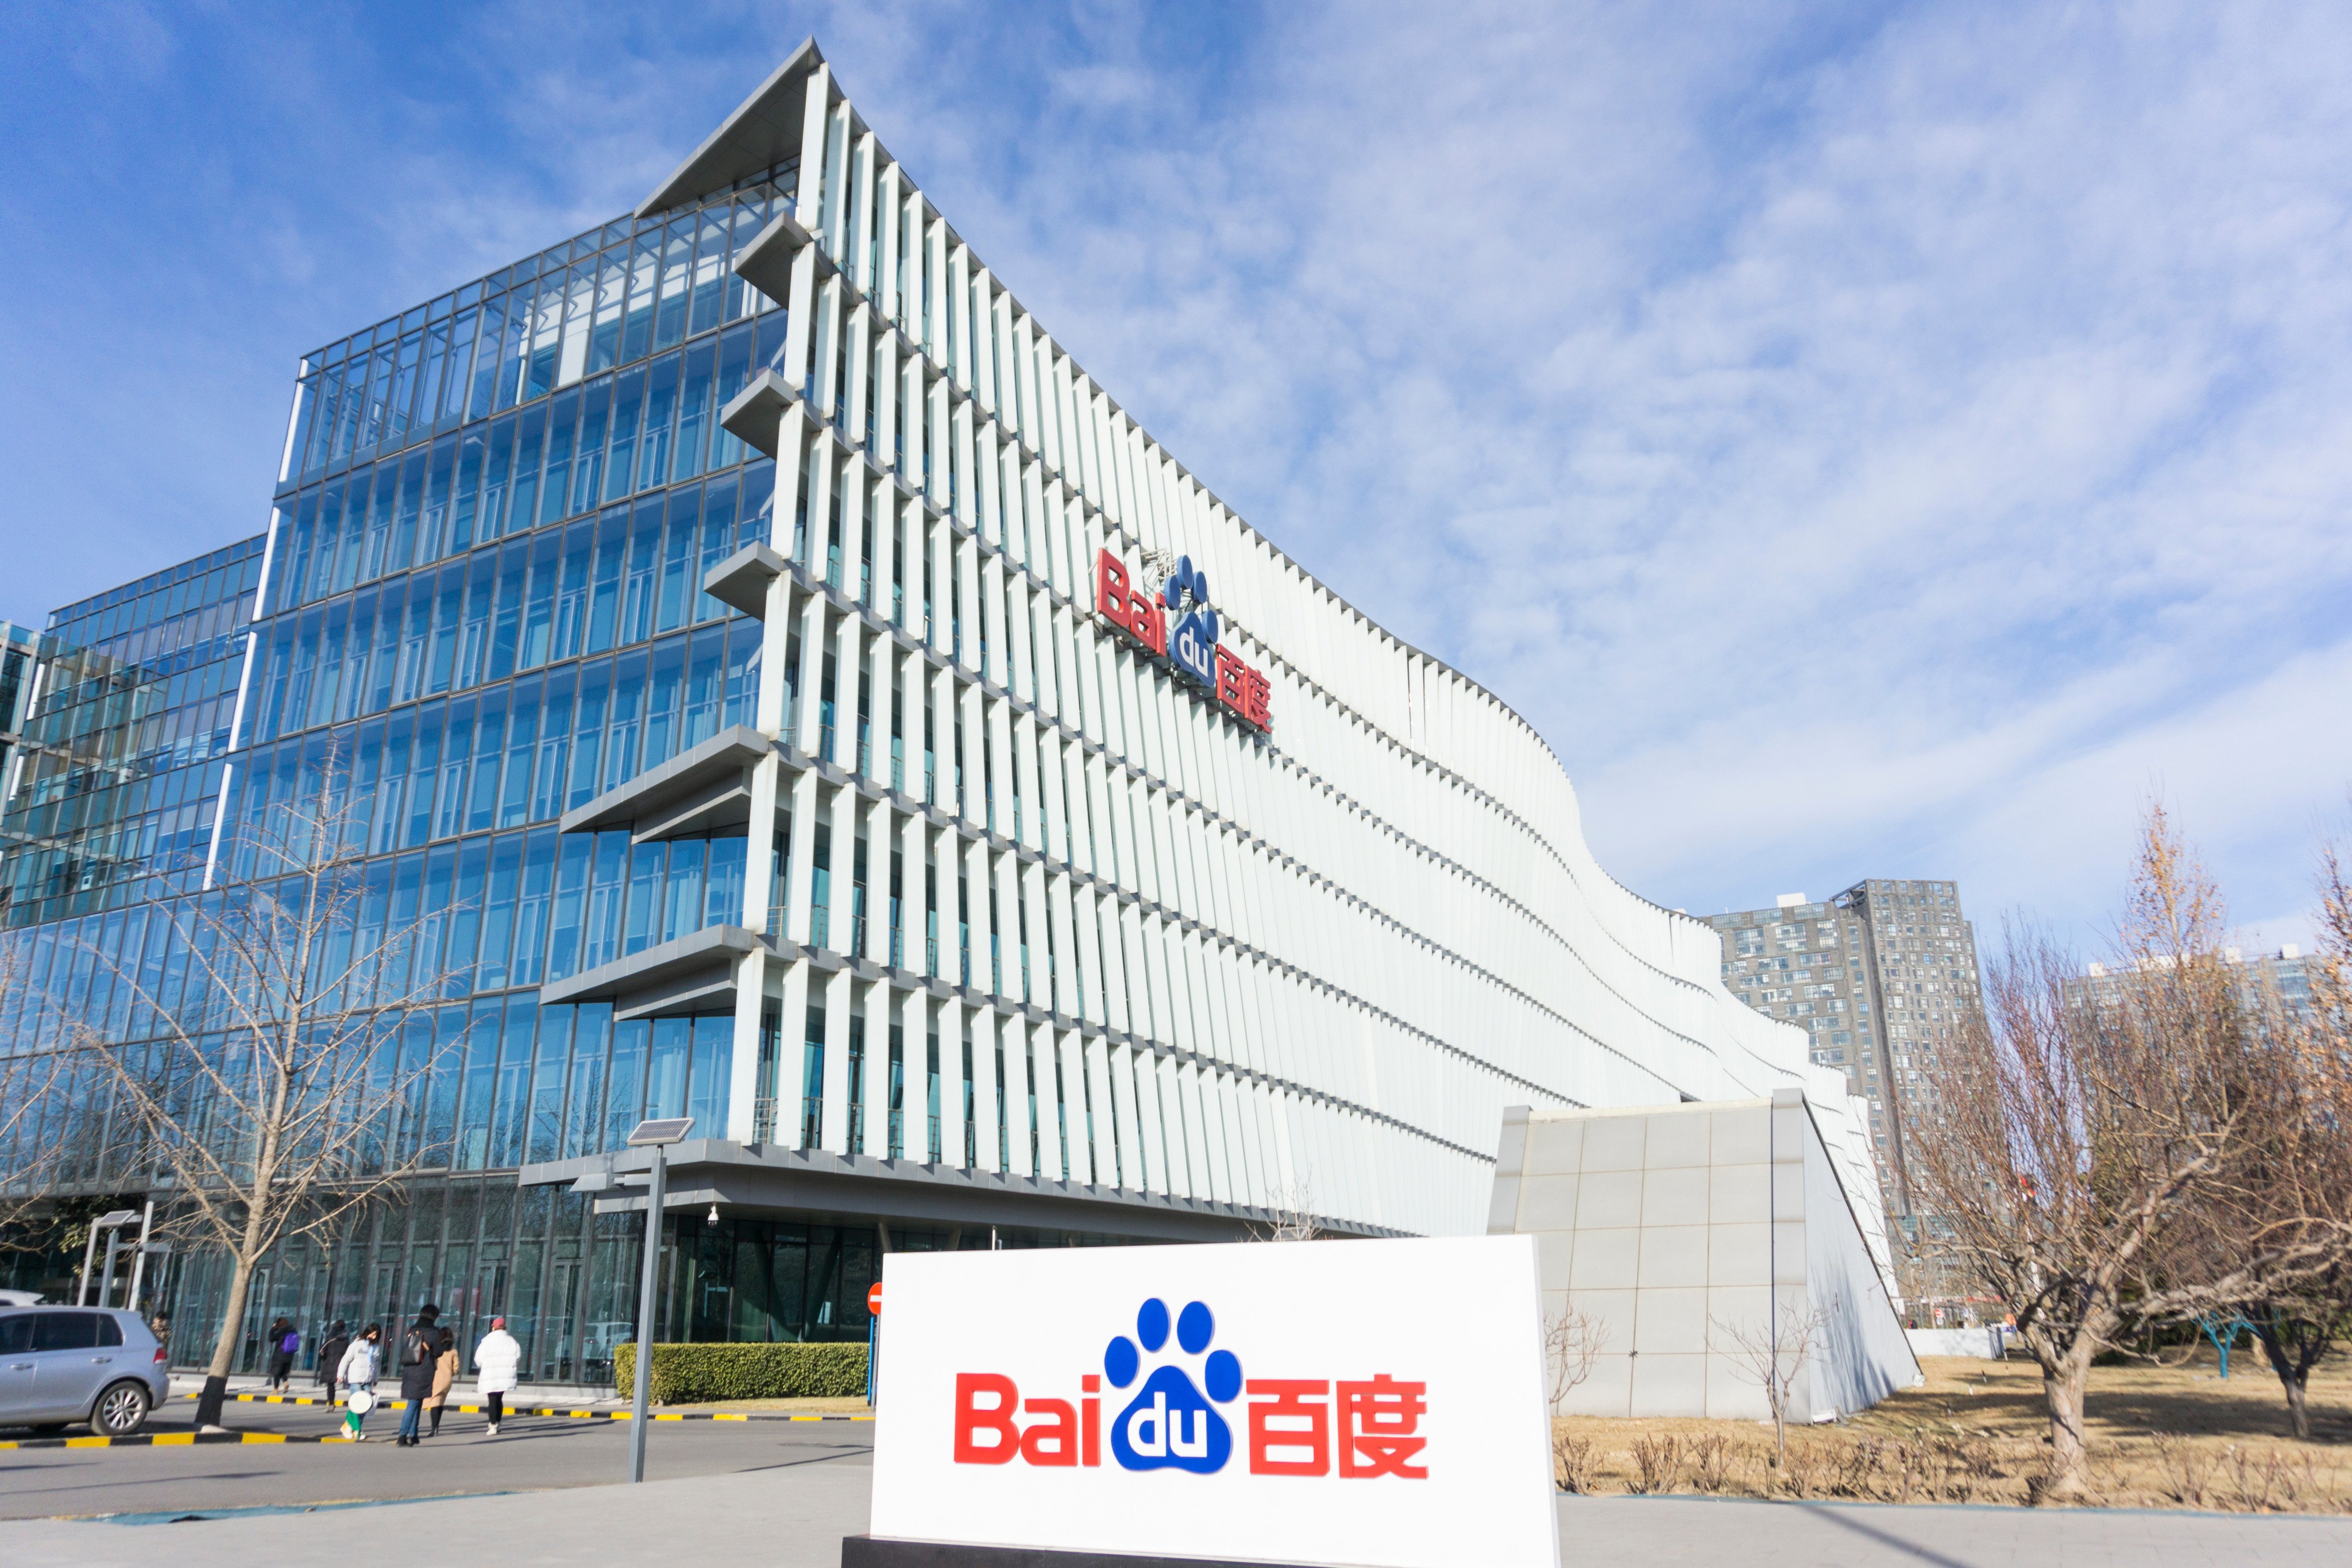 Baidu’s headquarters seen in Haidian district in Beijing on January 8, 2019. Photo: Shutterstock